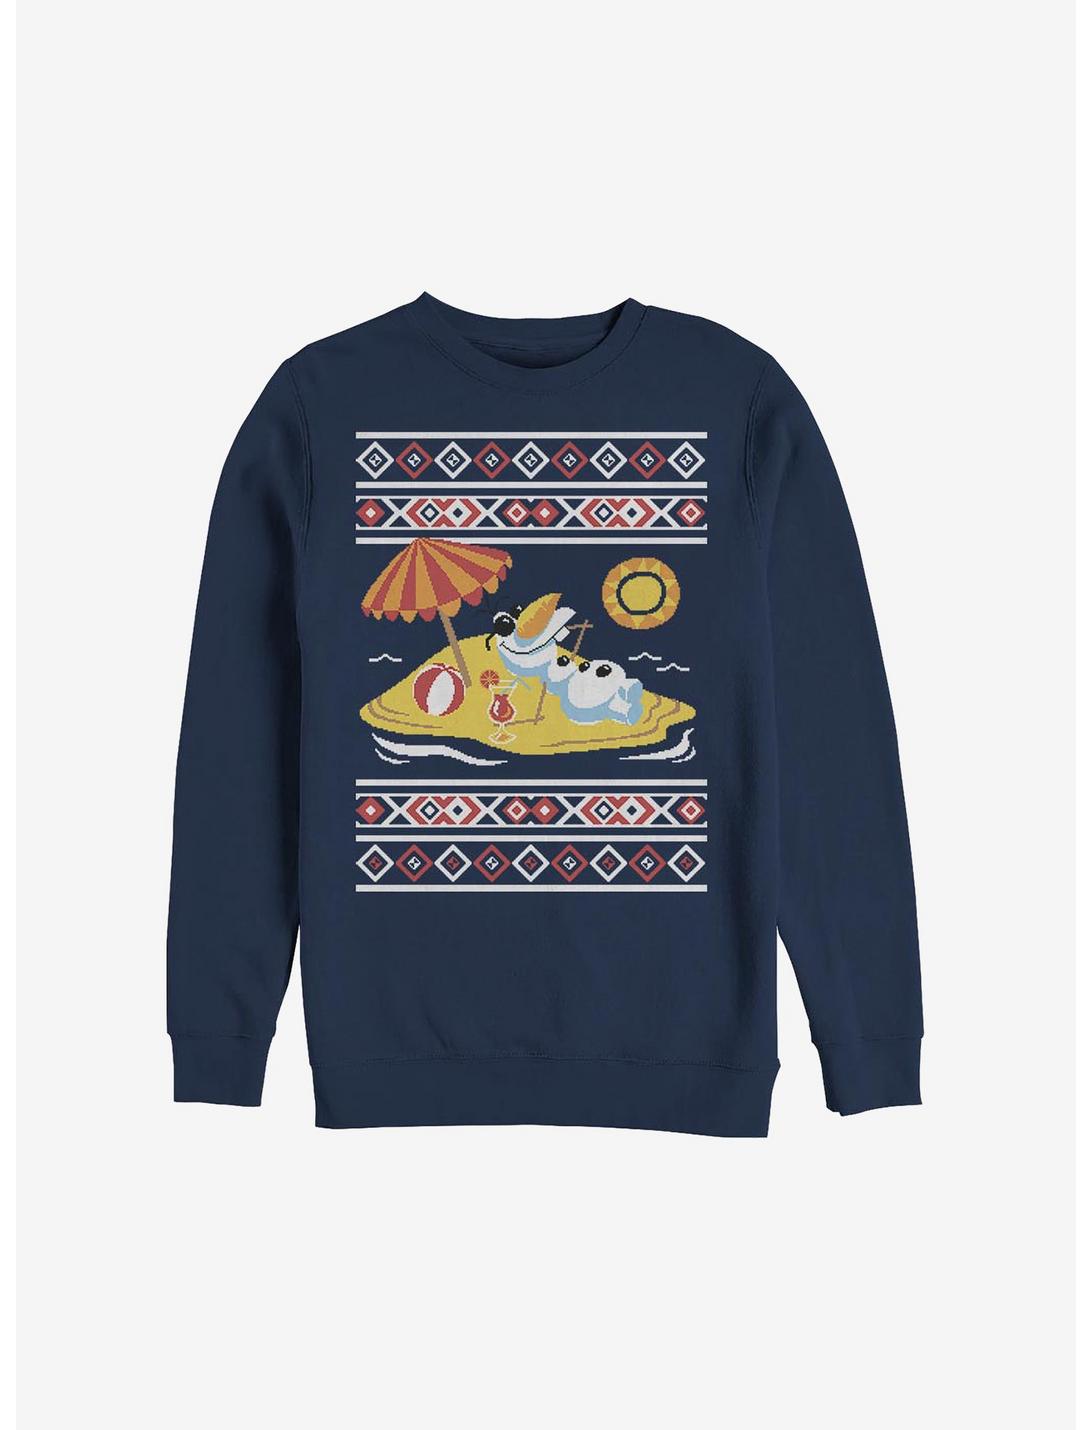 Disney Frozen Olaf Sweater Holiday Sweatshirt, NAVY, hi-res